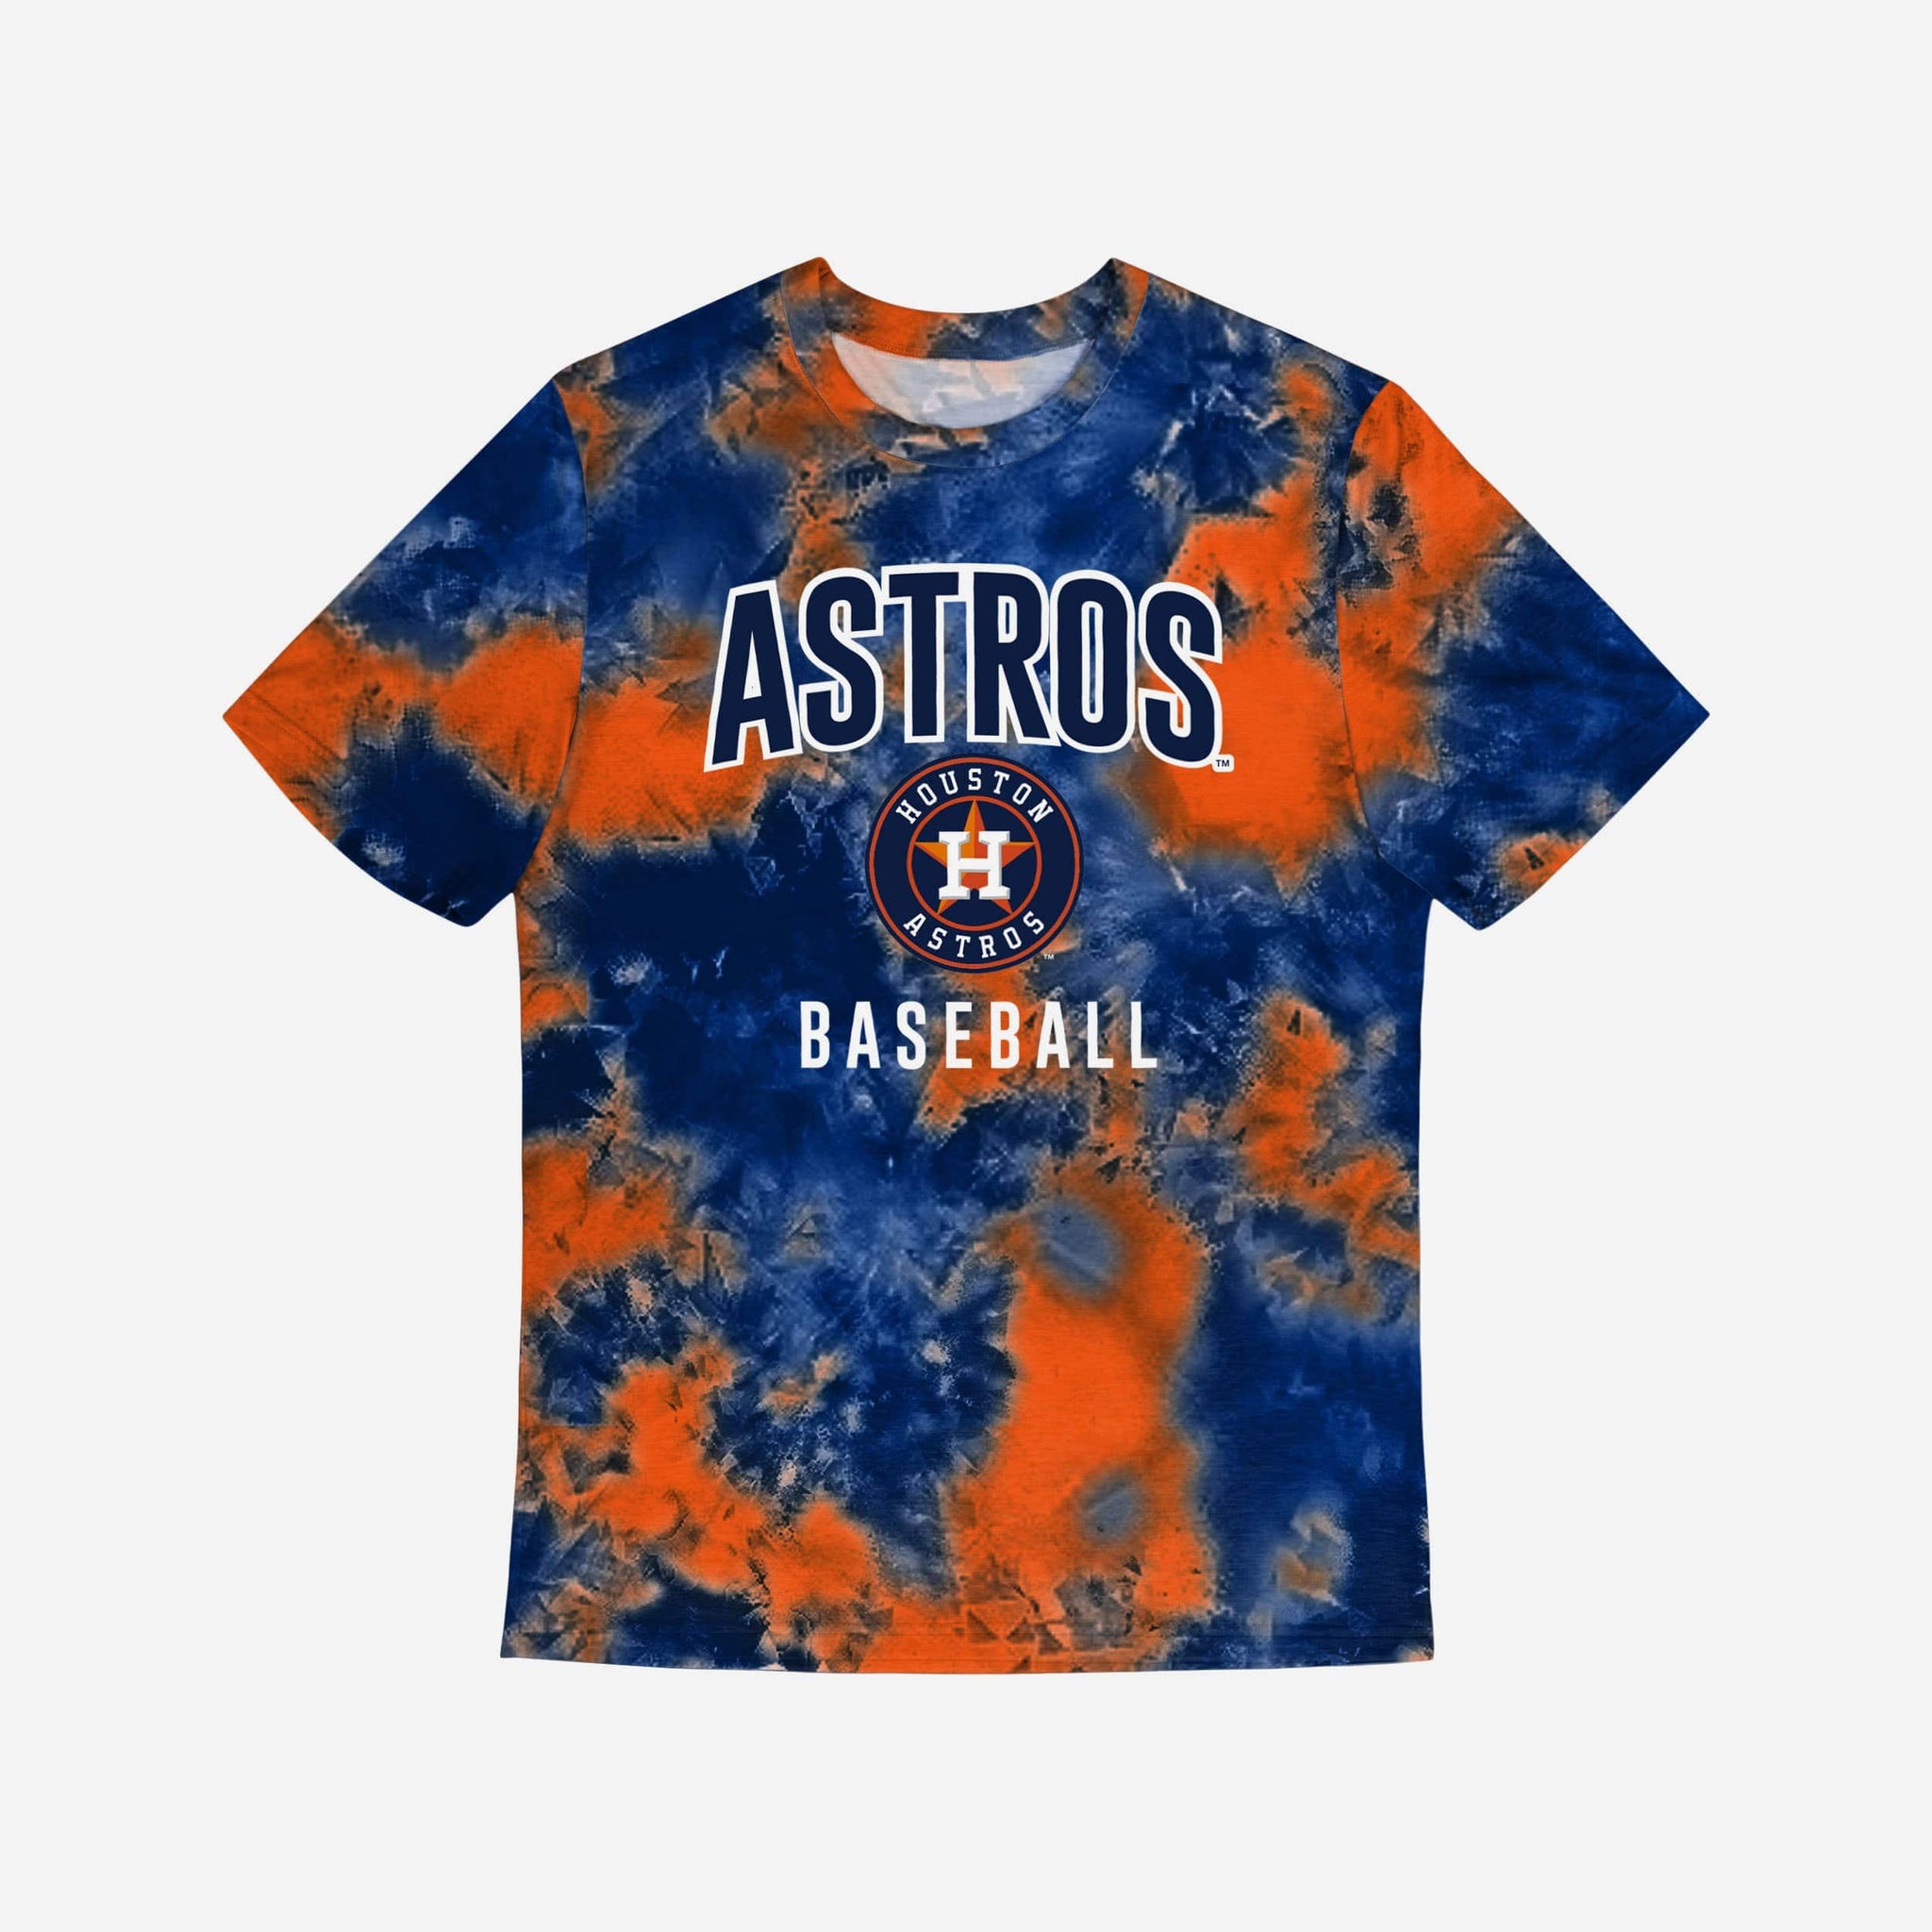 Custom TieDye kids Houston Astros shirt with Astros